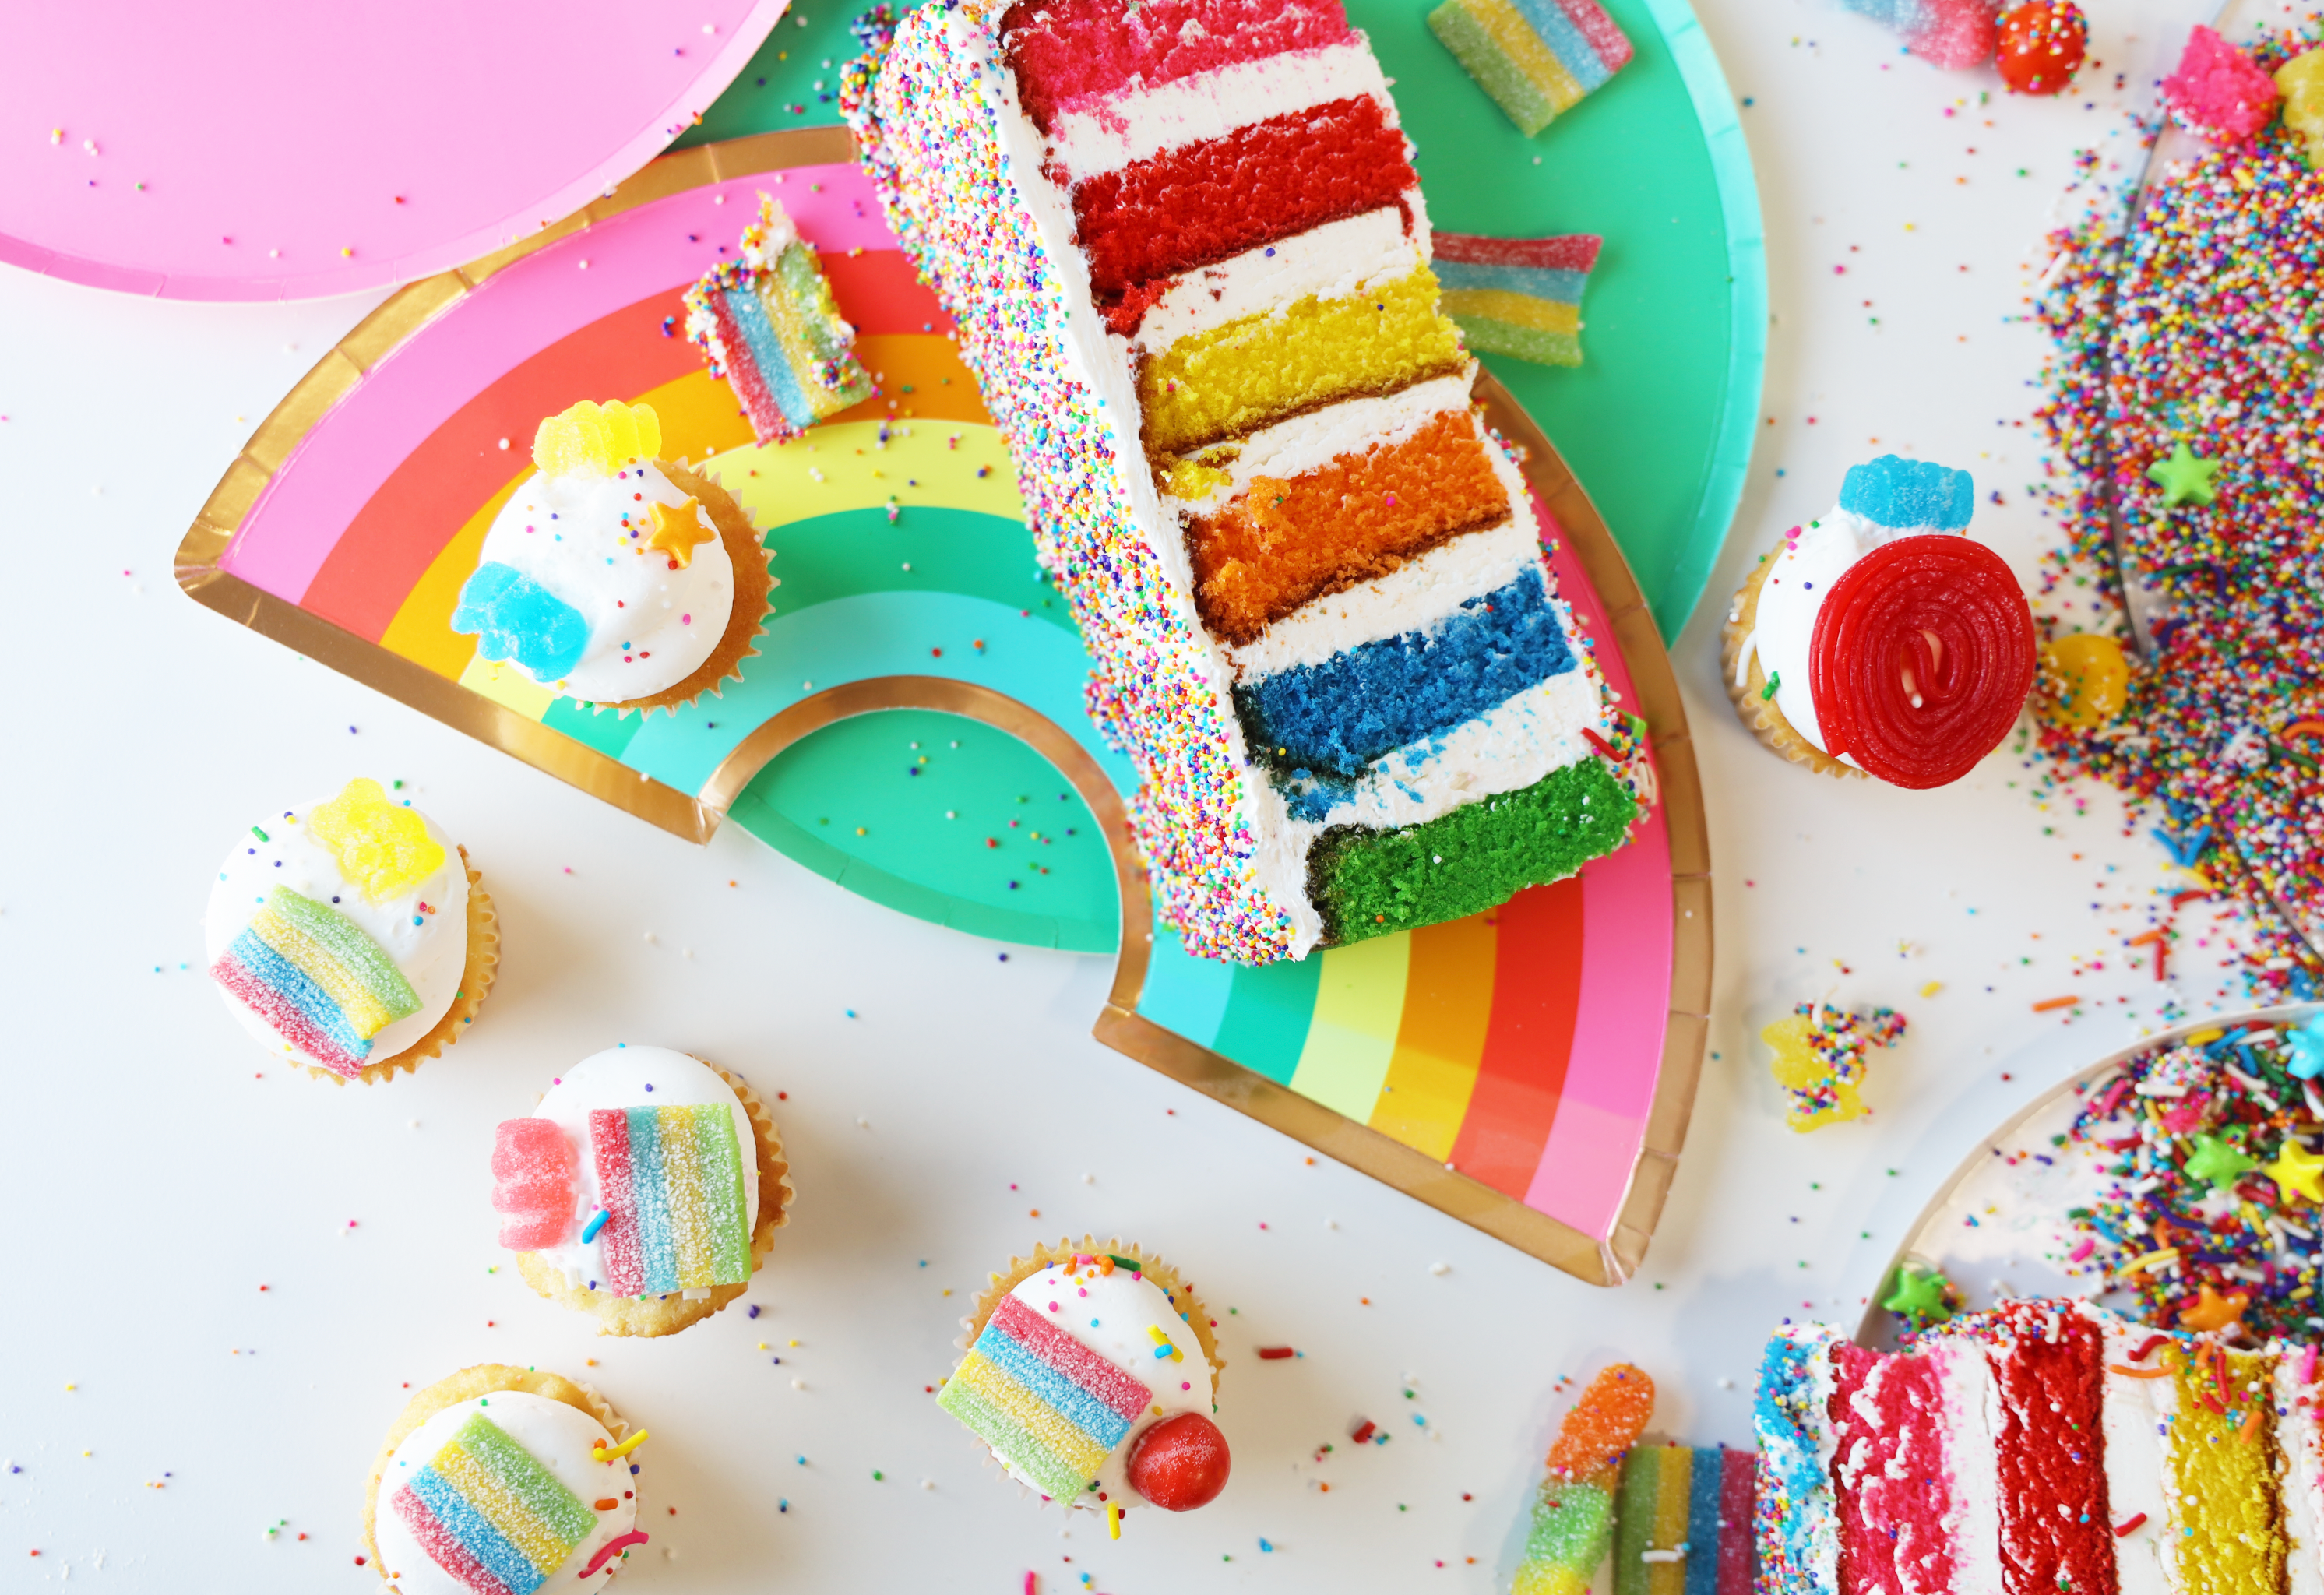 24 Mini Candy Cupcakes